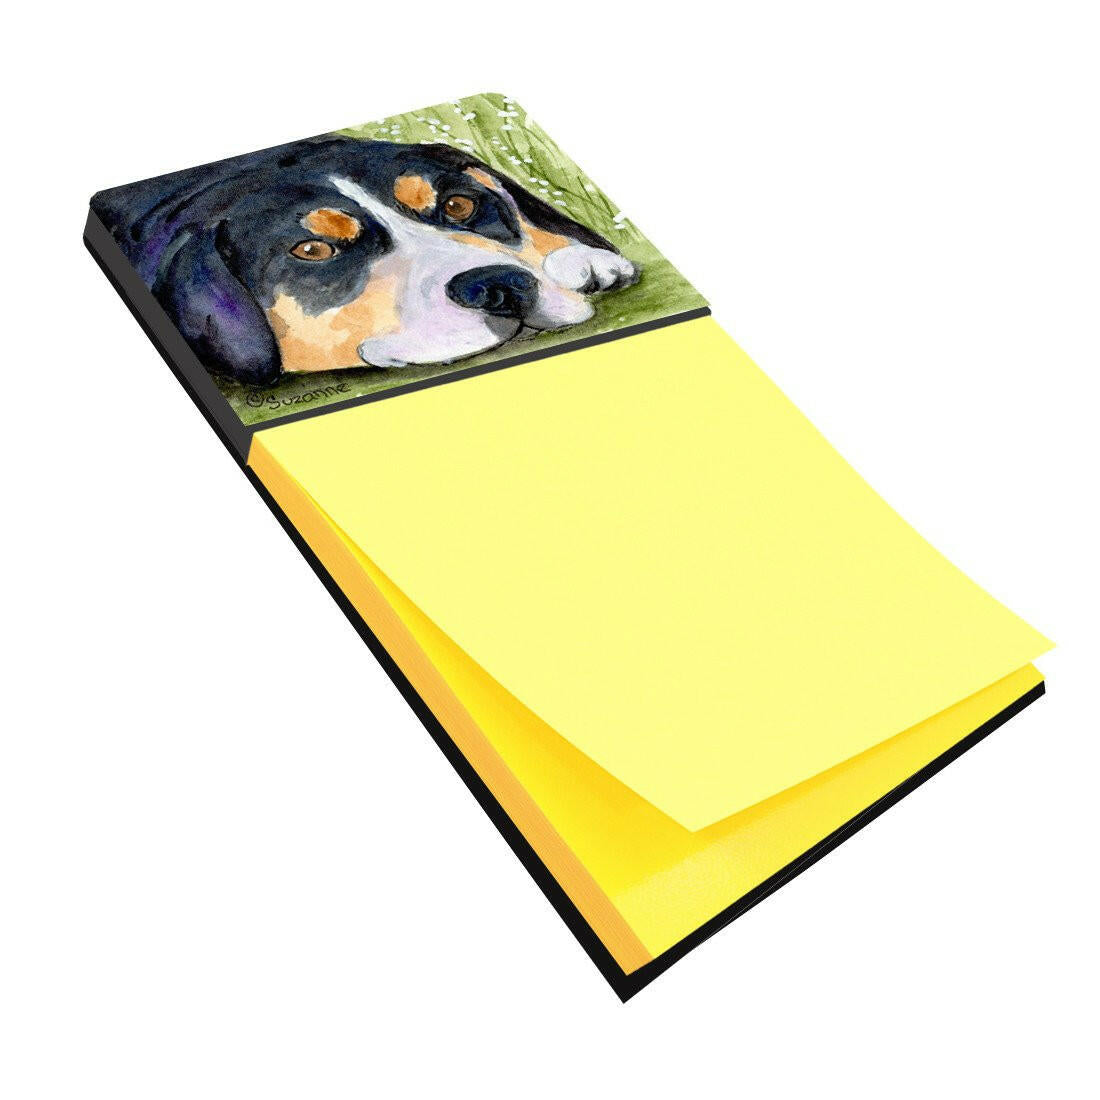 Entlebucher Mountain Dog Refiillable Sticky Note Holder or Postit Note Dispenser SS8596SN by Caroline's Treasures